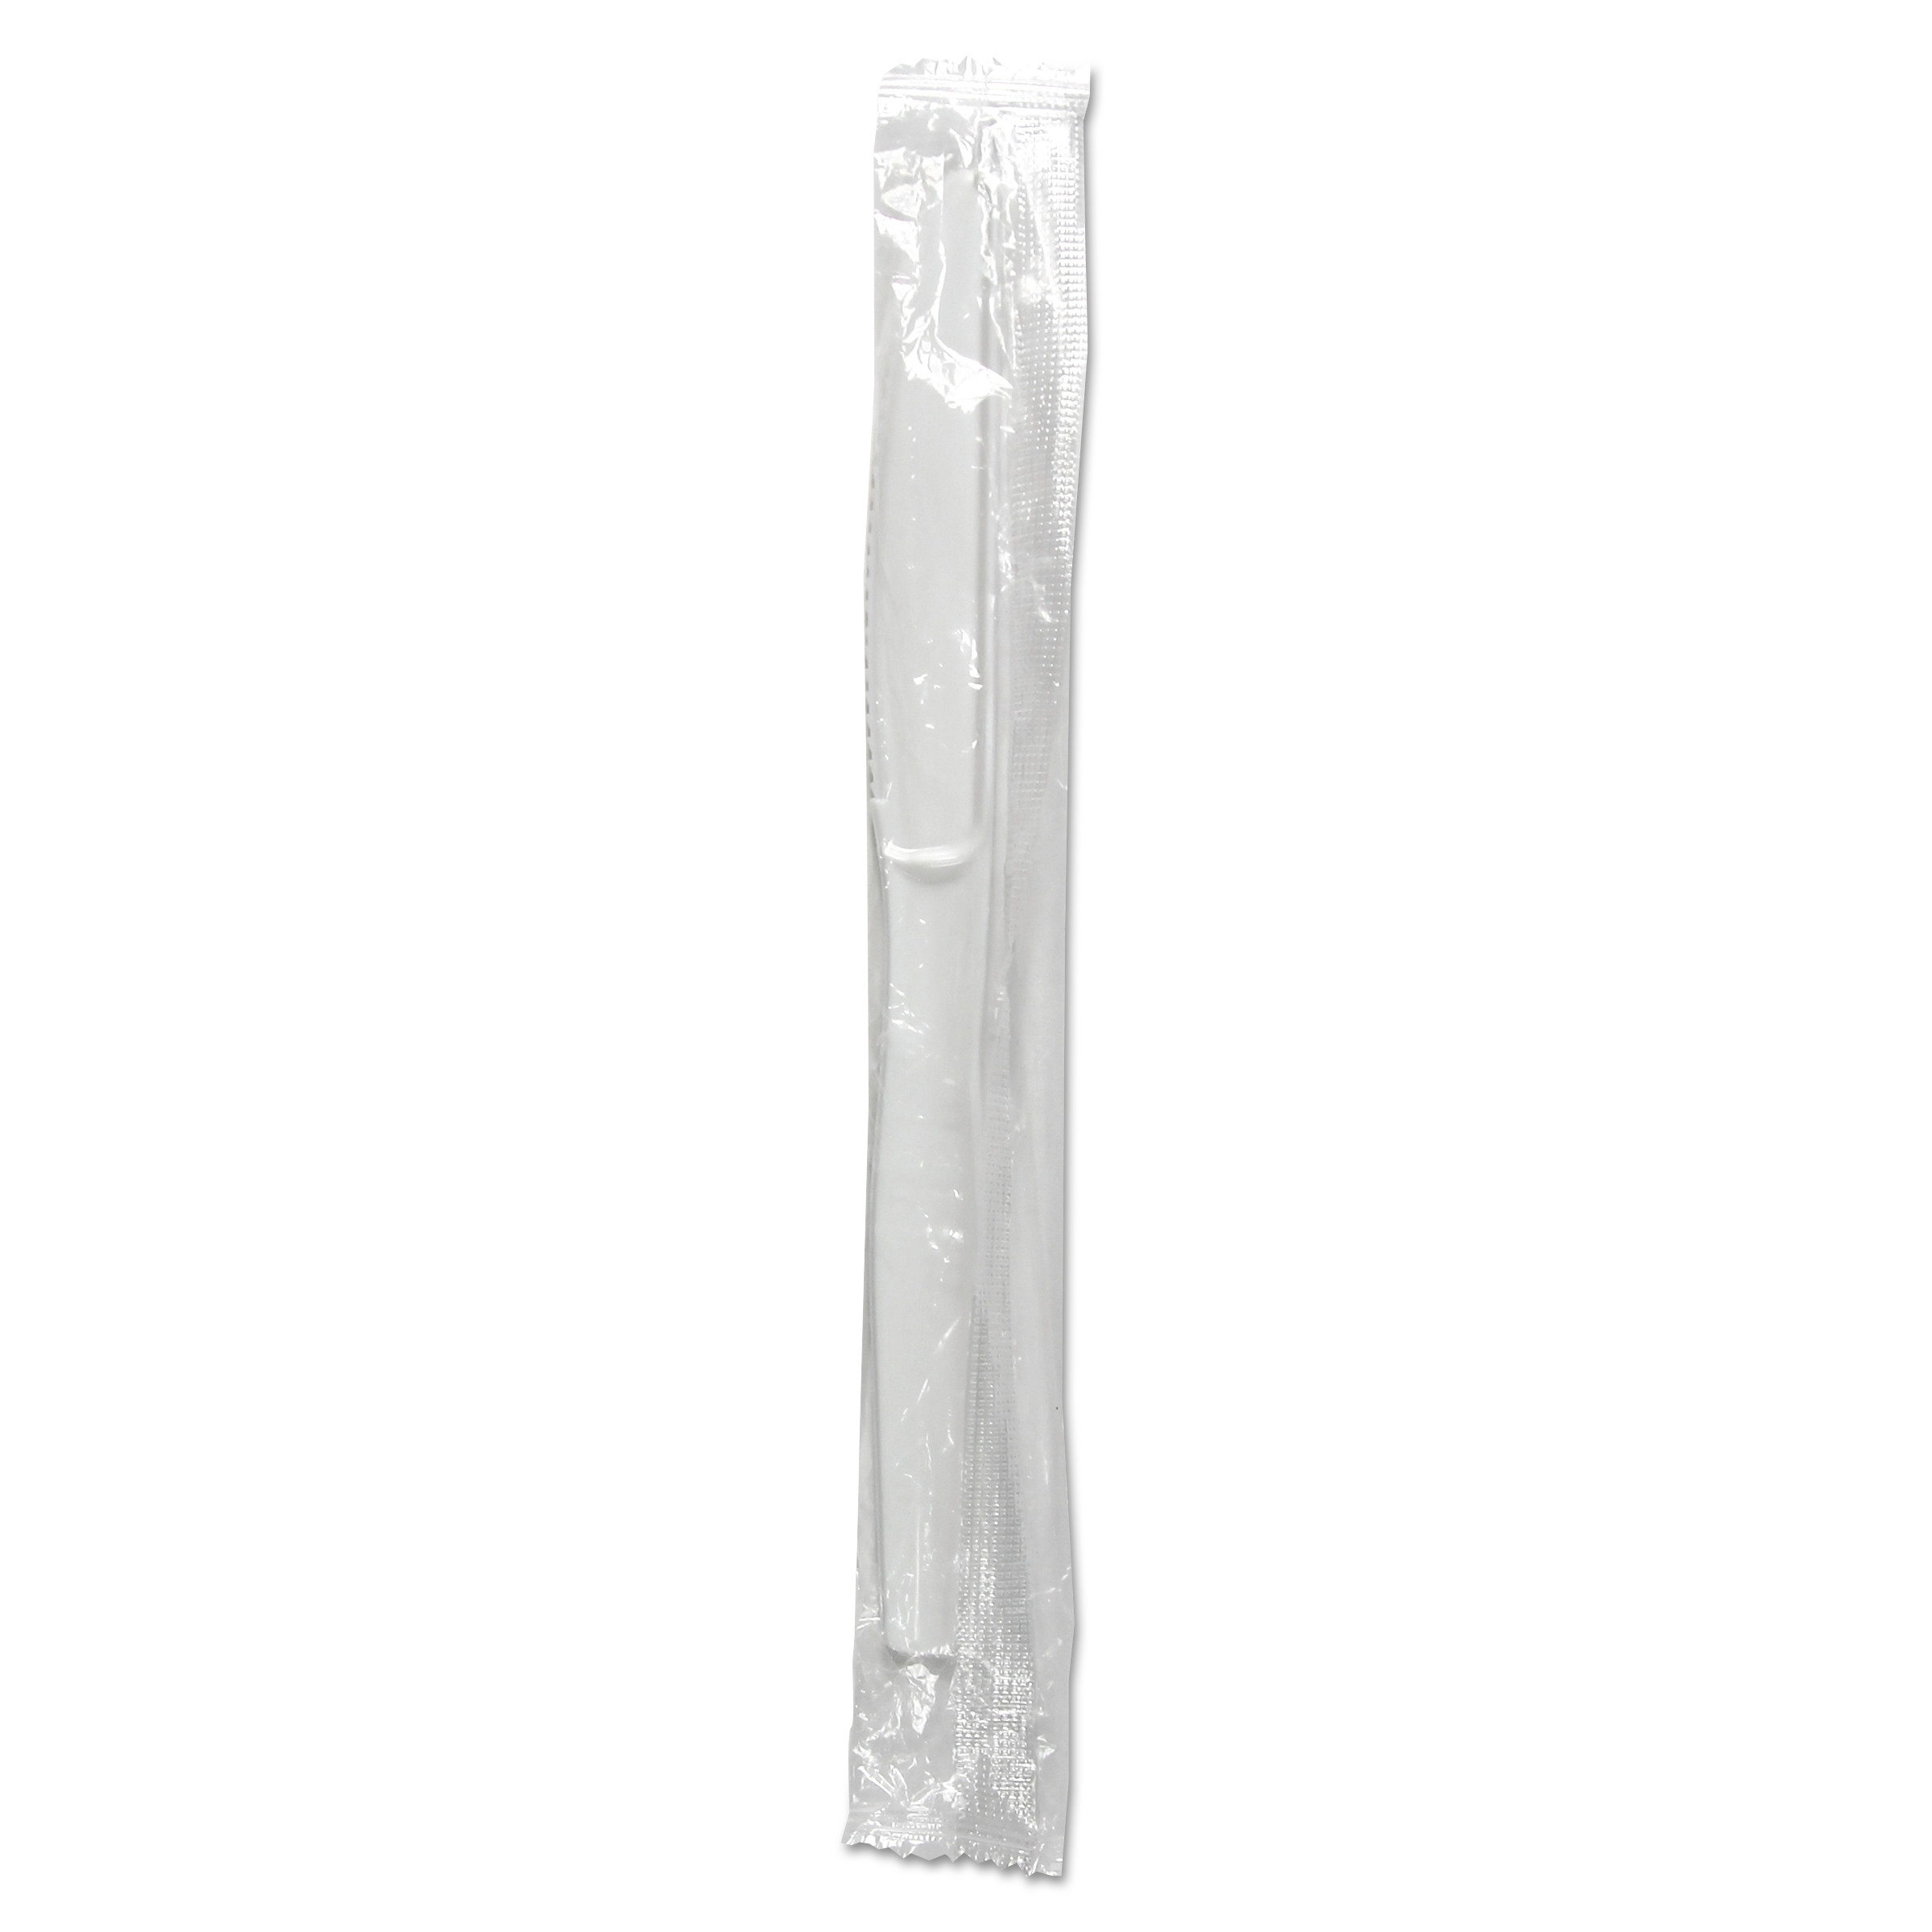 Mediumweight Wrapped Polystyrene Cutlery, Knife, White, 1000/Carton